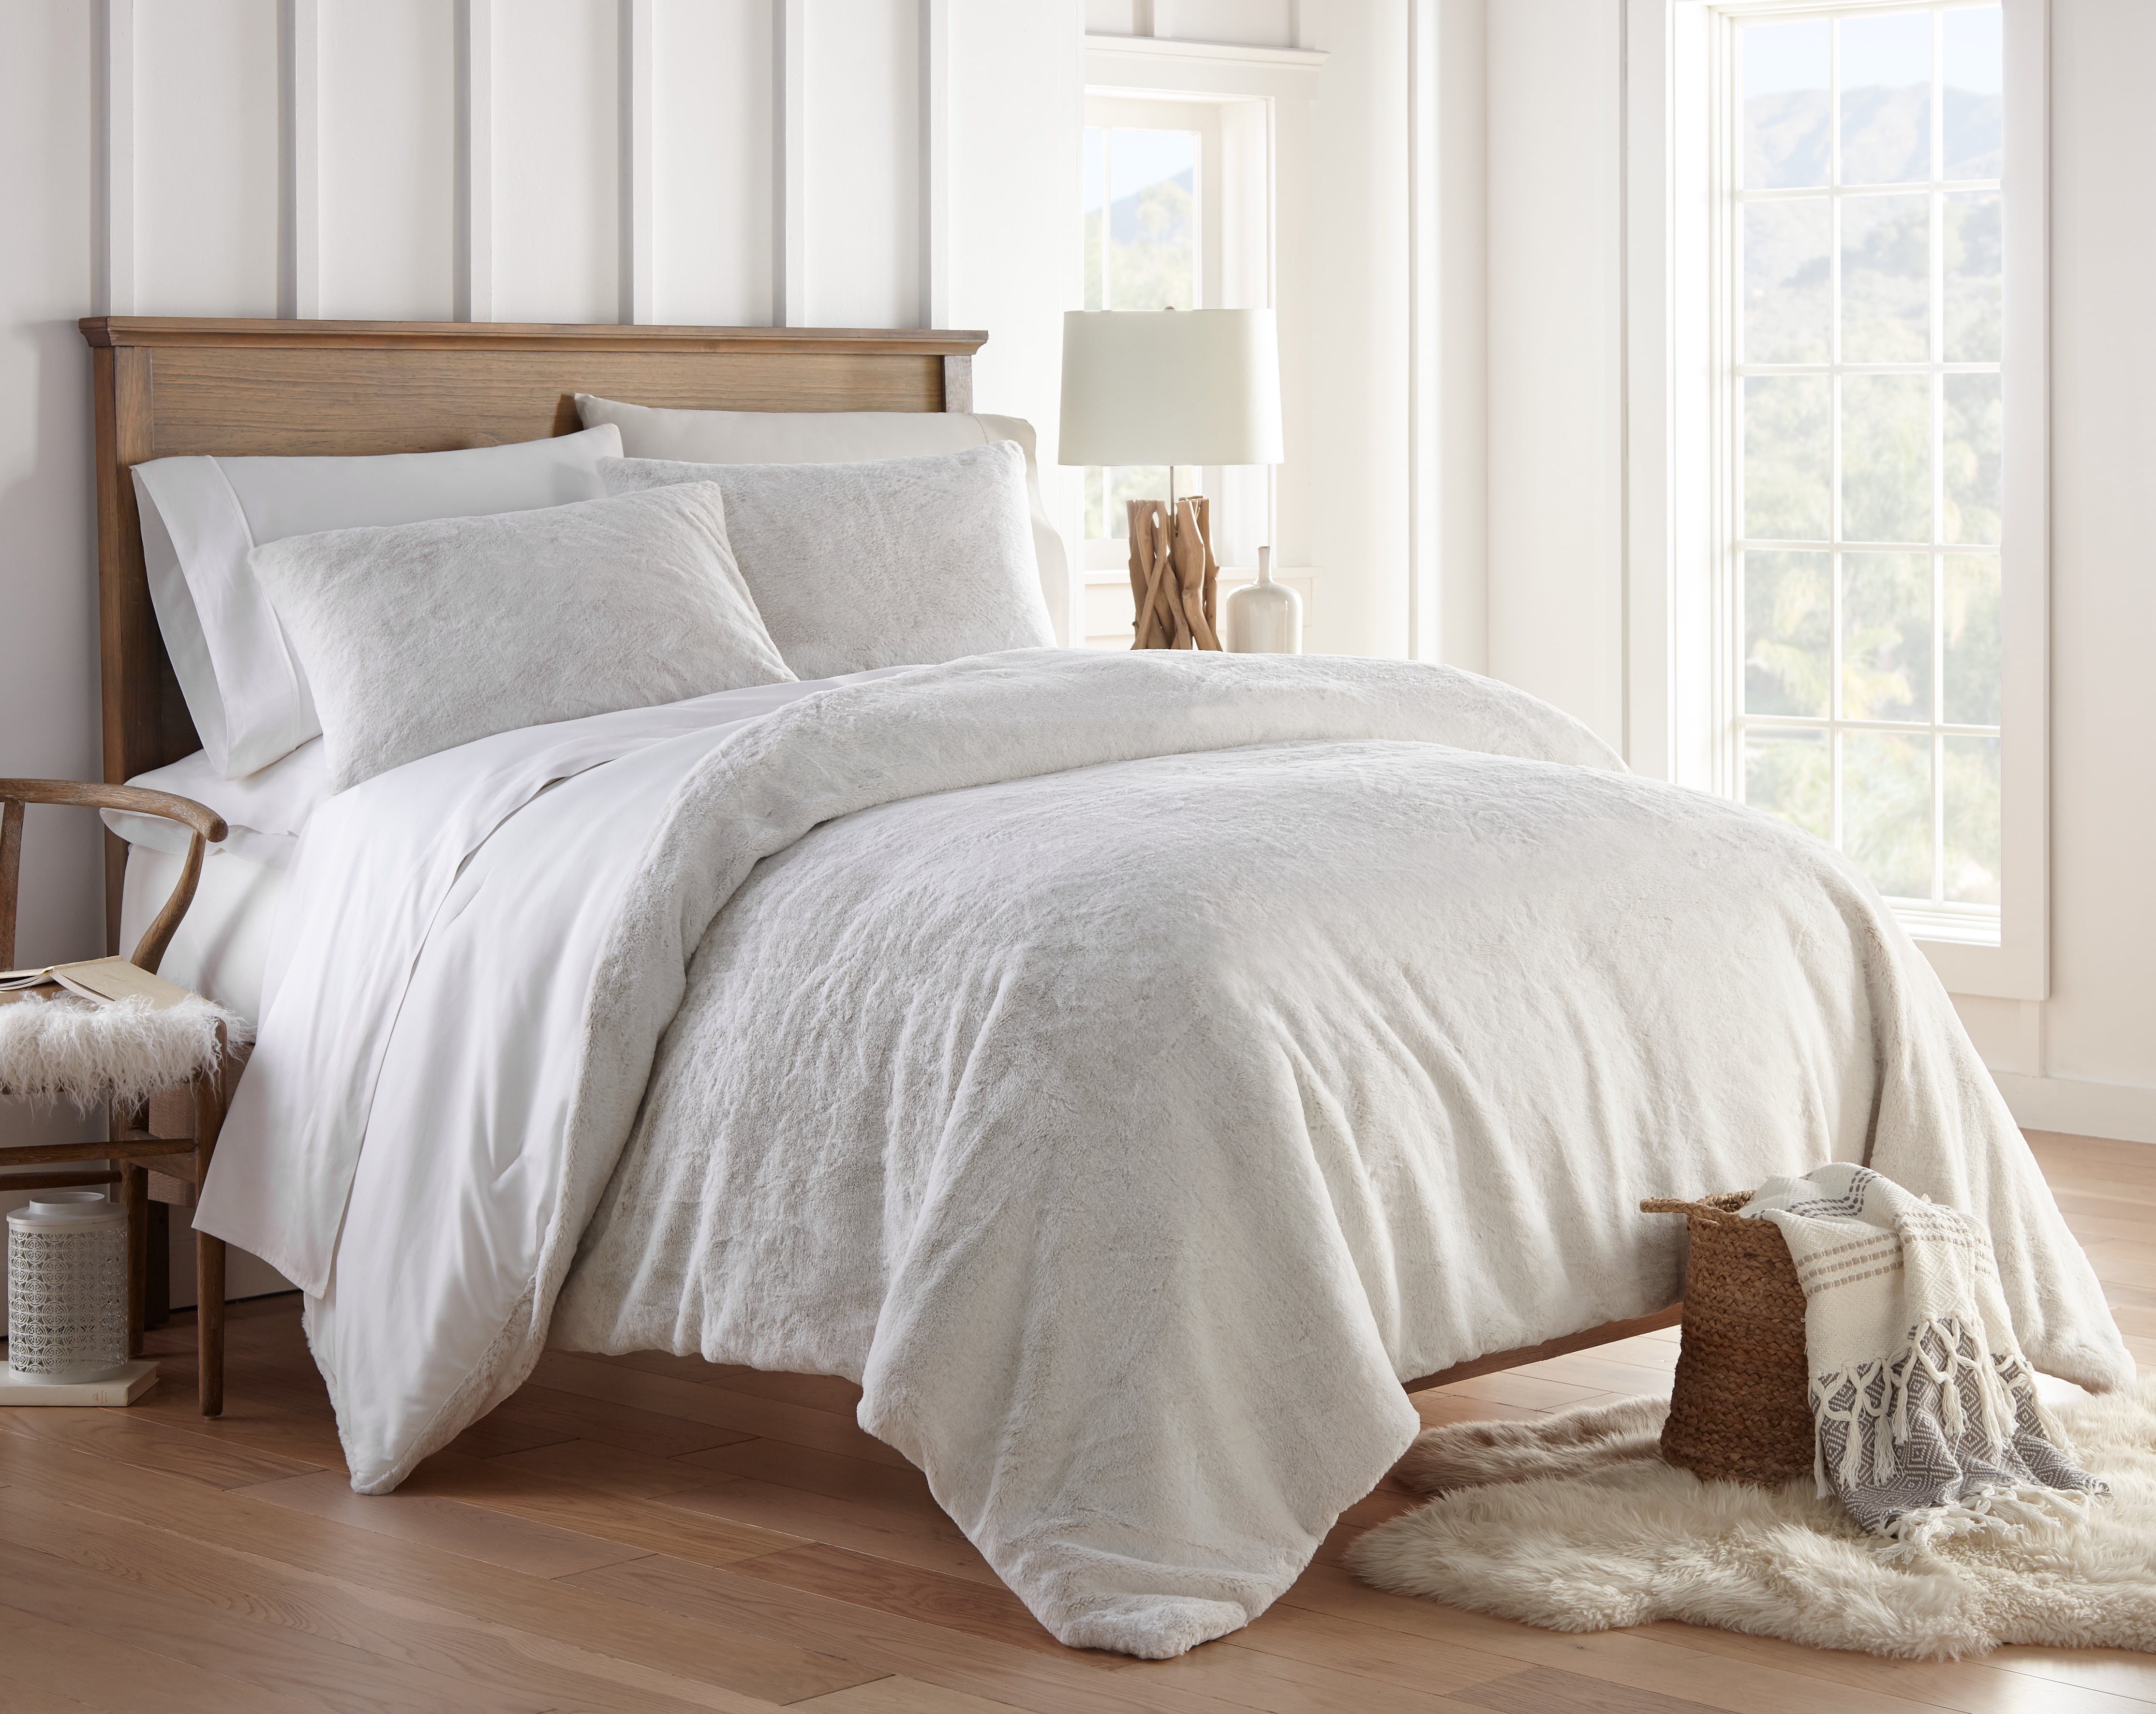 Lanco Serena Faux Fur 3-Piece Comforter Set, White, Queen - Walmart.com ...